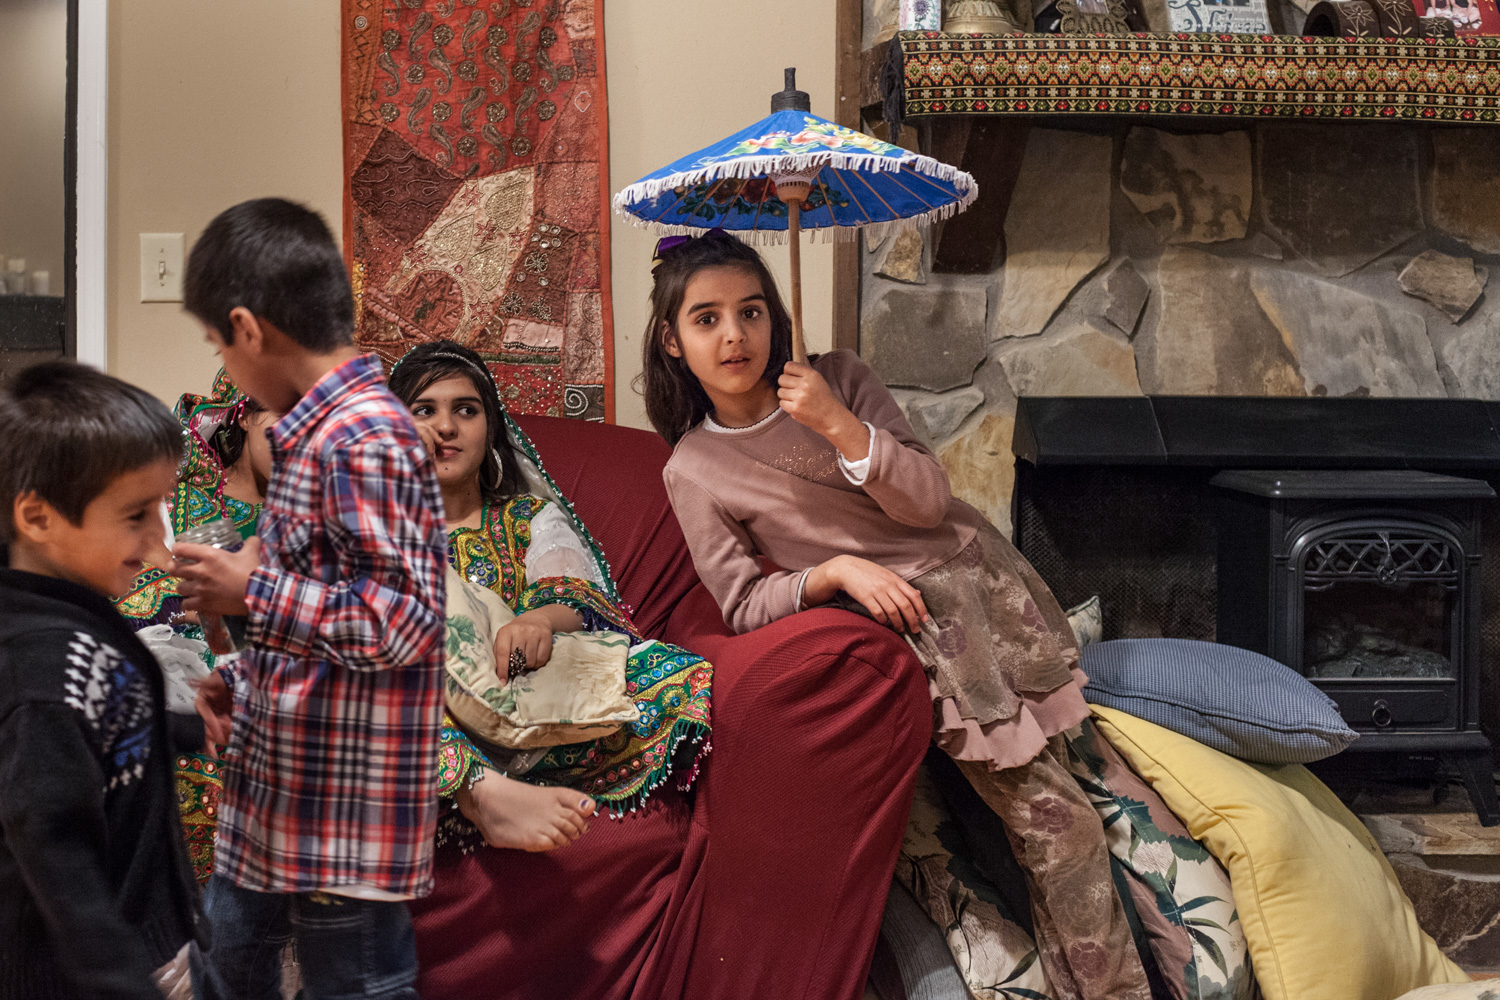  Saadia, and Afghani refugee, poses beneath an umbrella at a friends home in Buford, Georgia. (2014). 